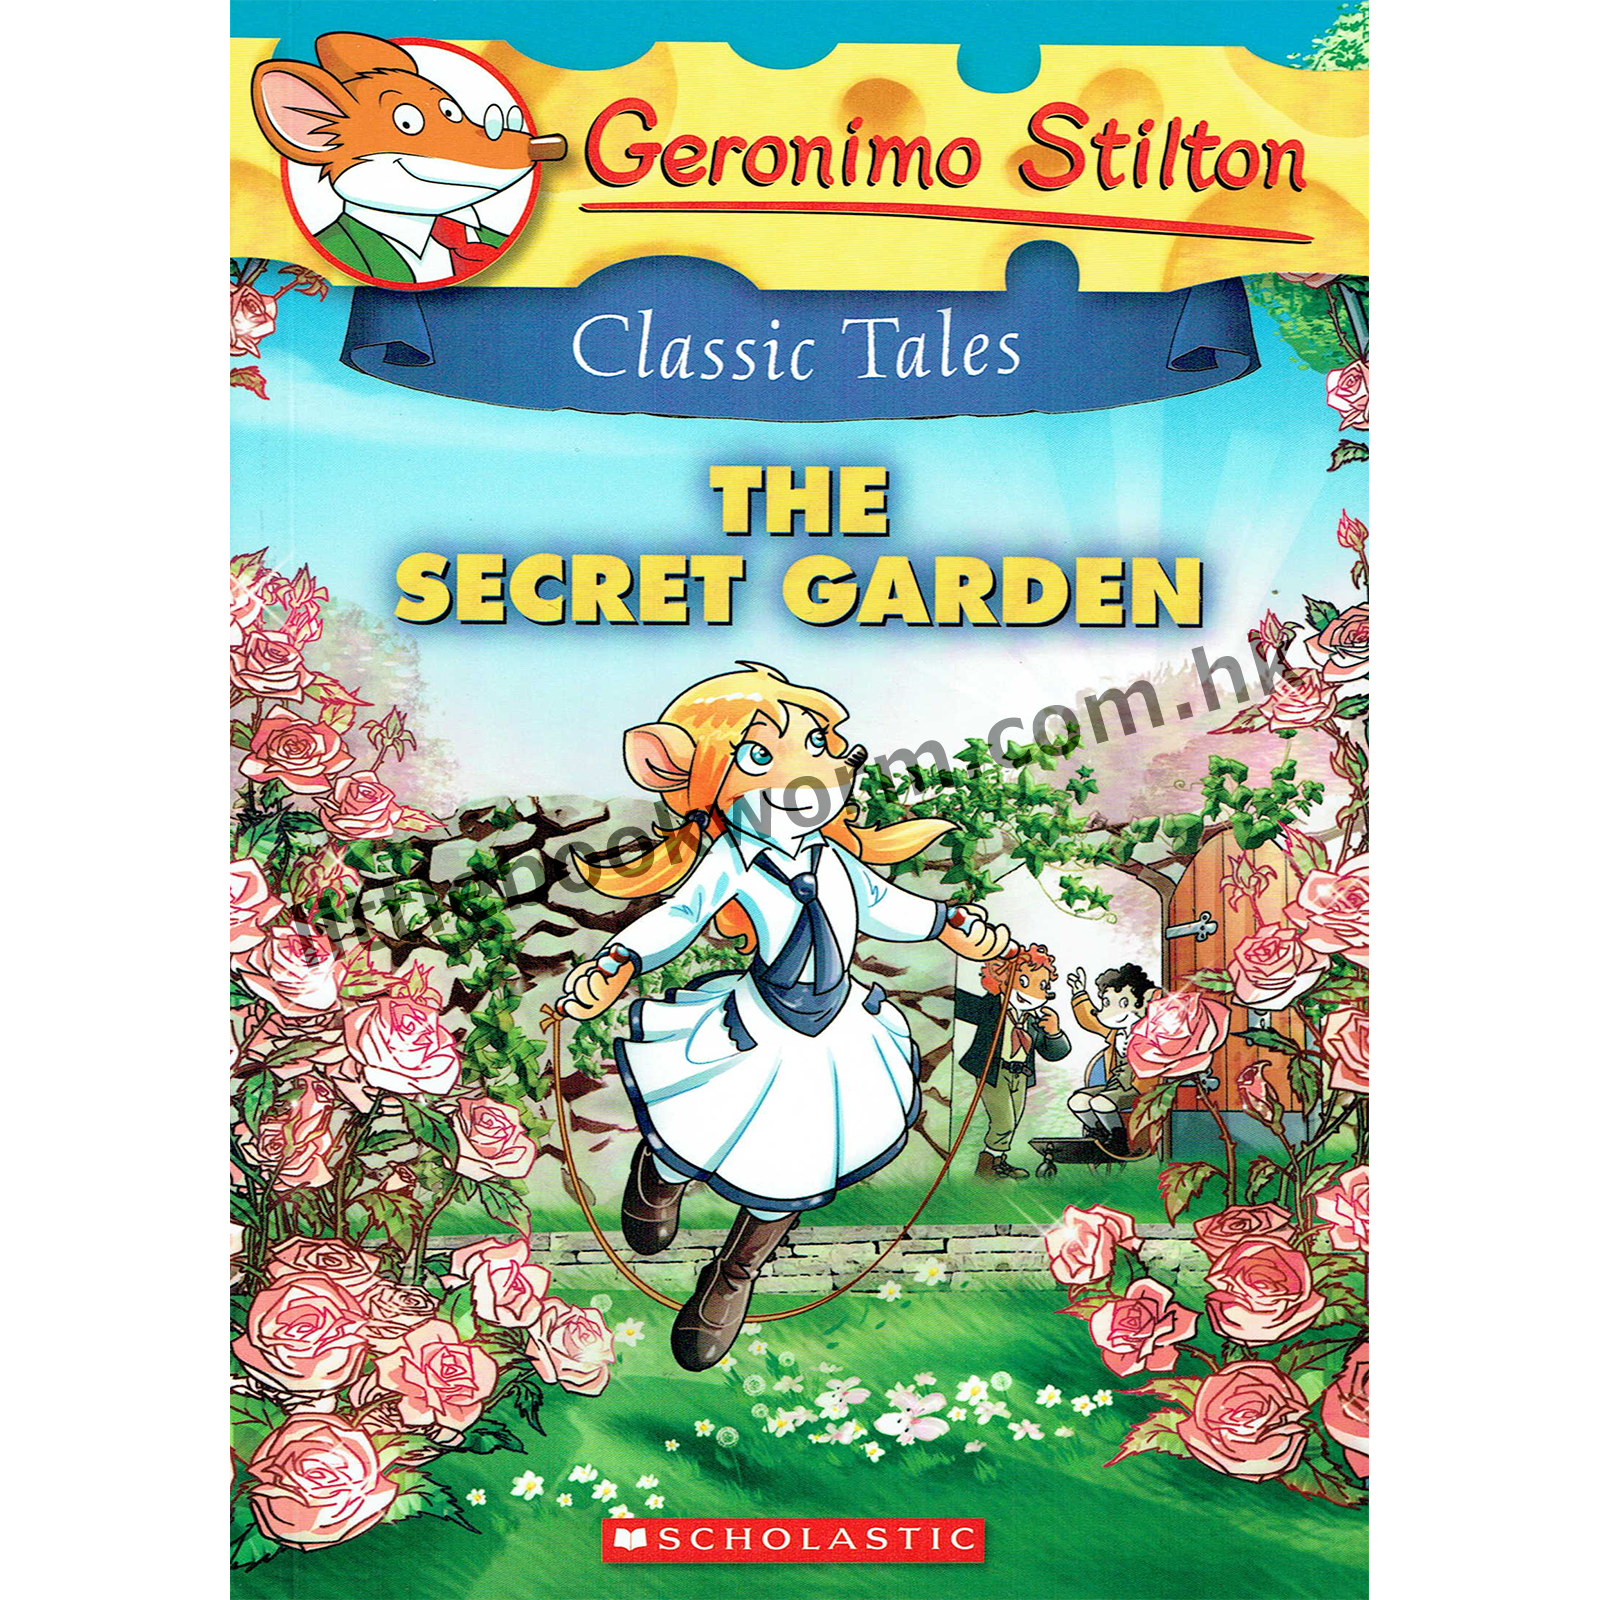 Geronimo Stilton Classics Tales Collection (Books 1-10)